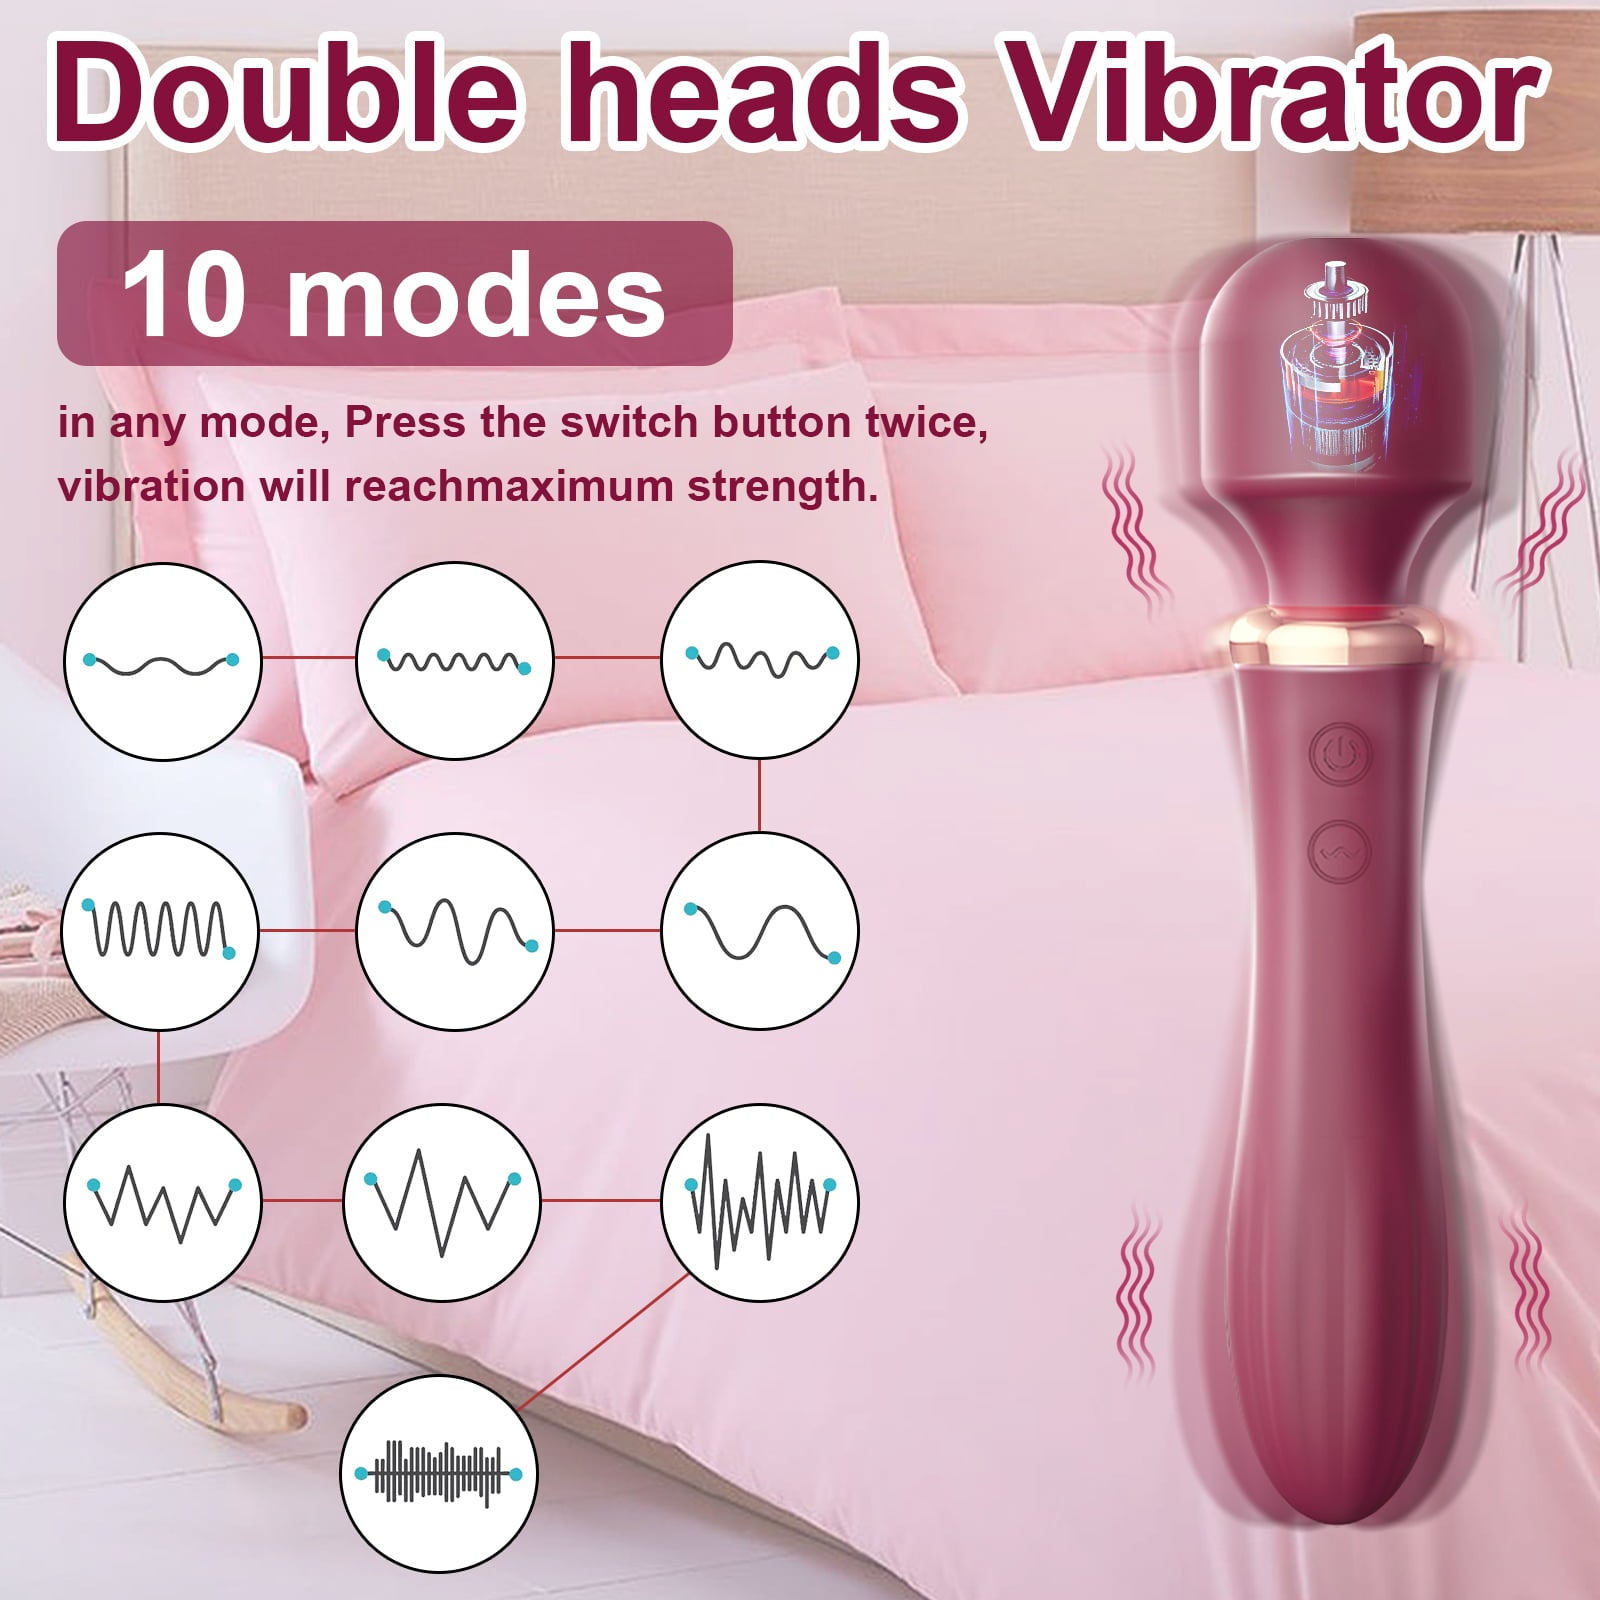 10 Vibrating Double-headed Heating Vibrator Female Wand Massager